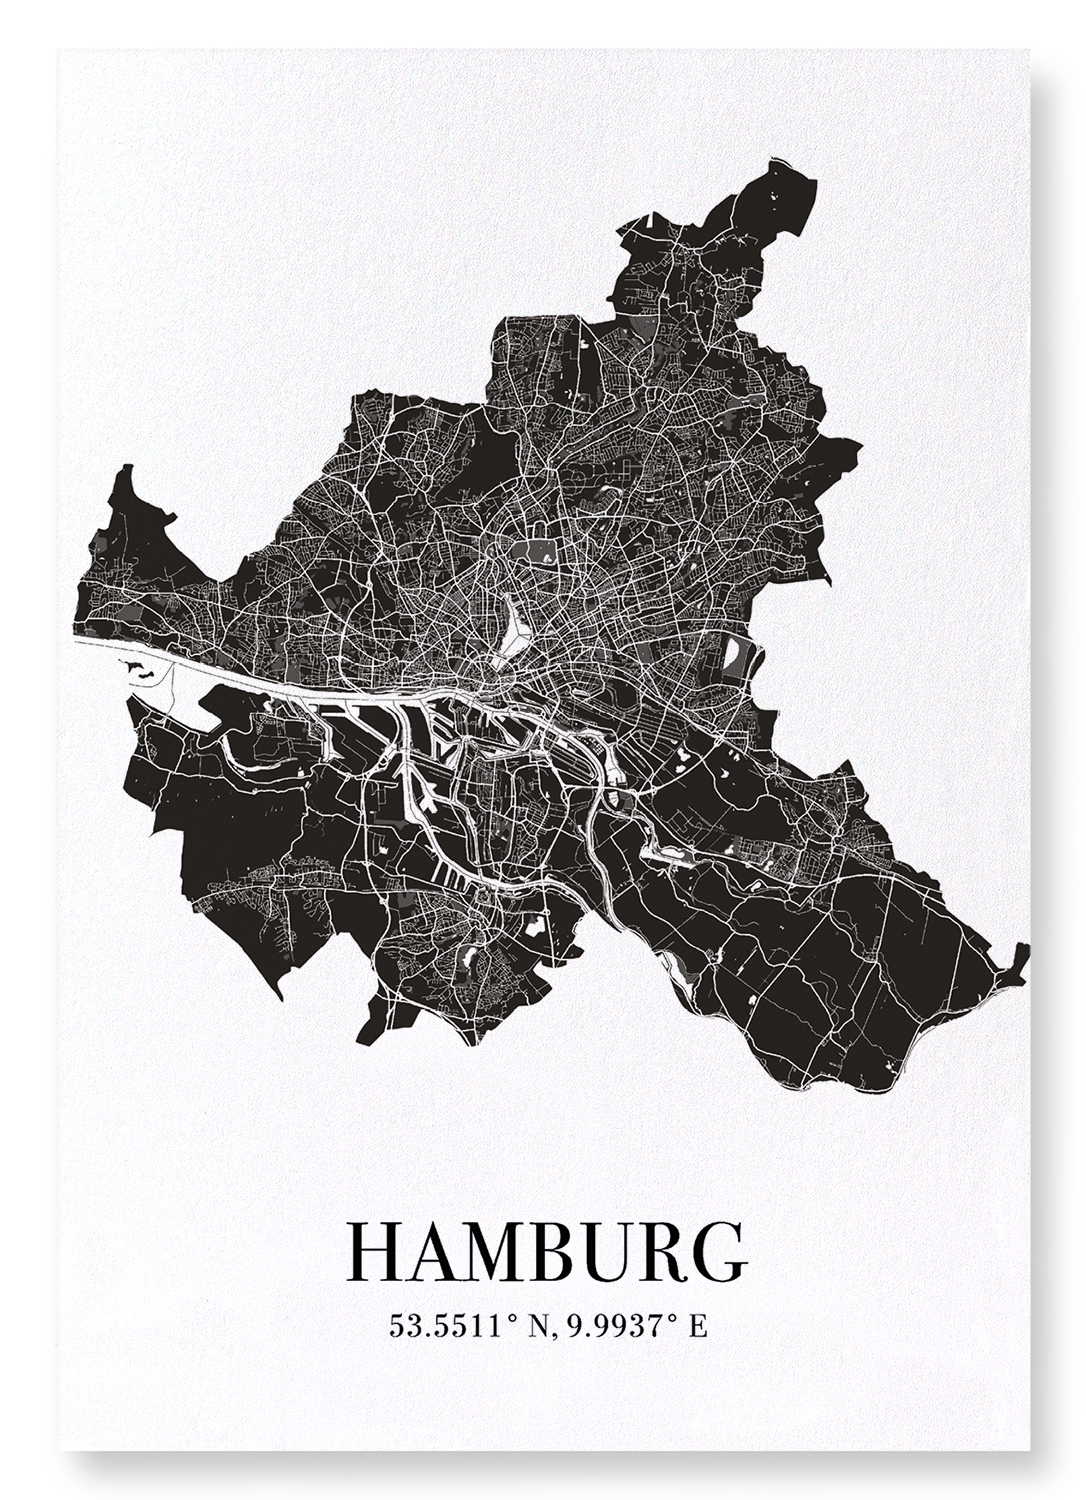 HAMBURG CUTOUT: Map Cutout Art Print